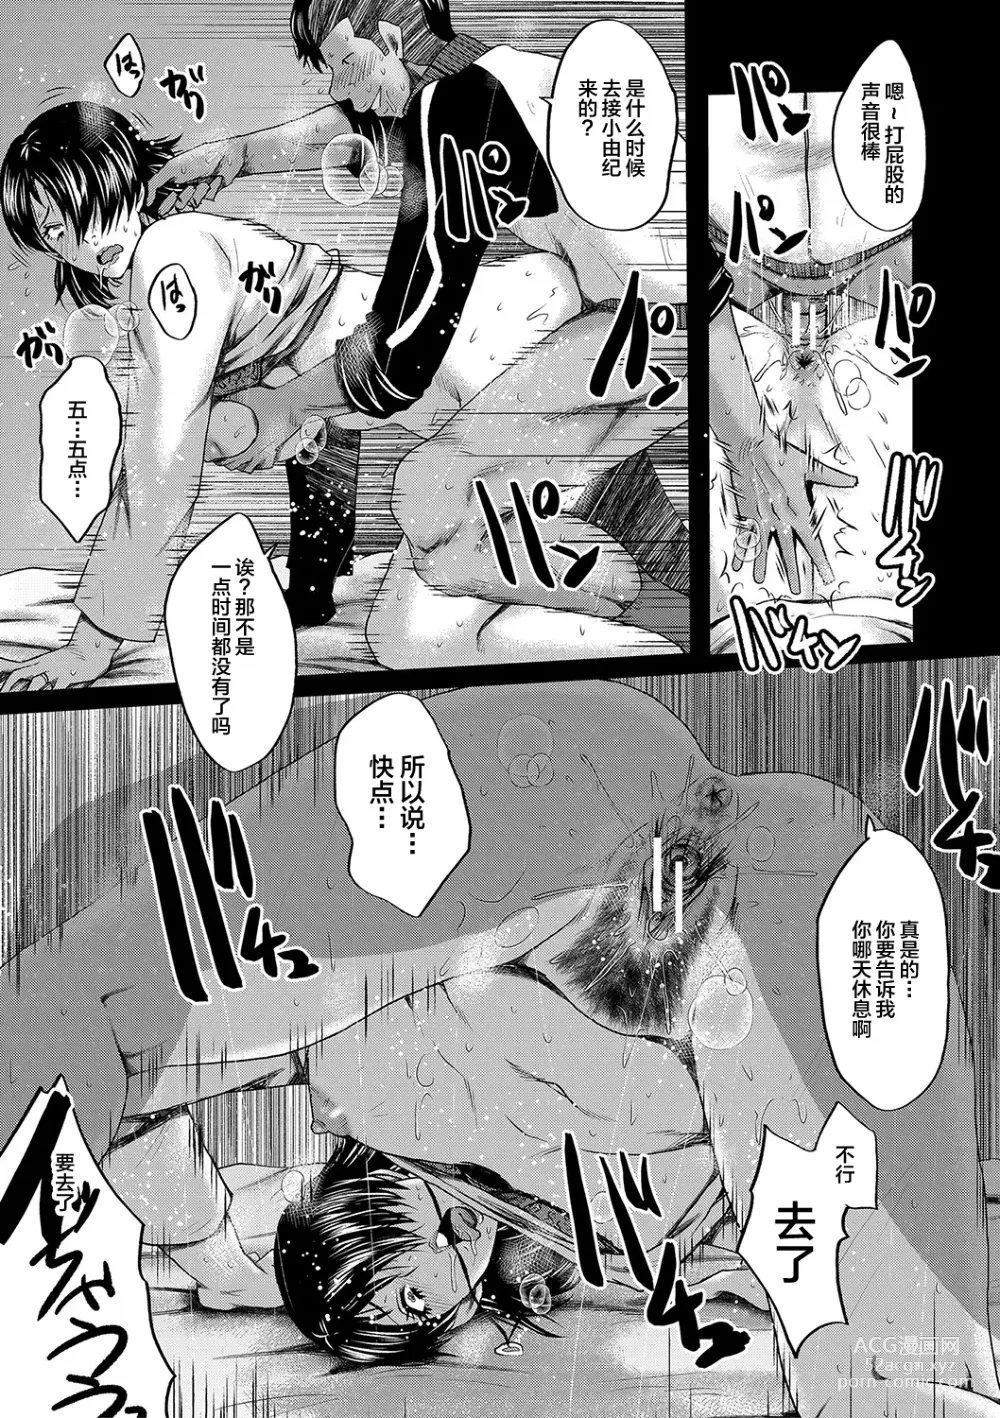 Page 182 of manga Tomodachi, Osananajimi mo Kaa-san mo Netorareru